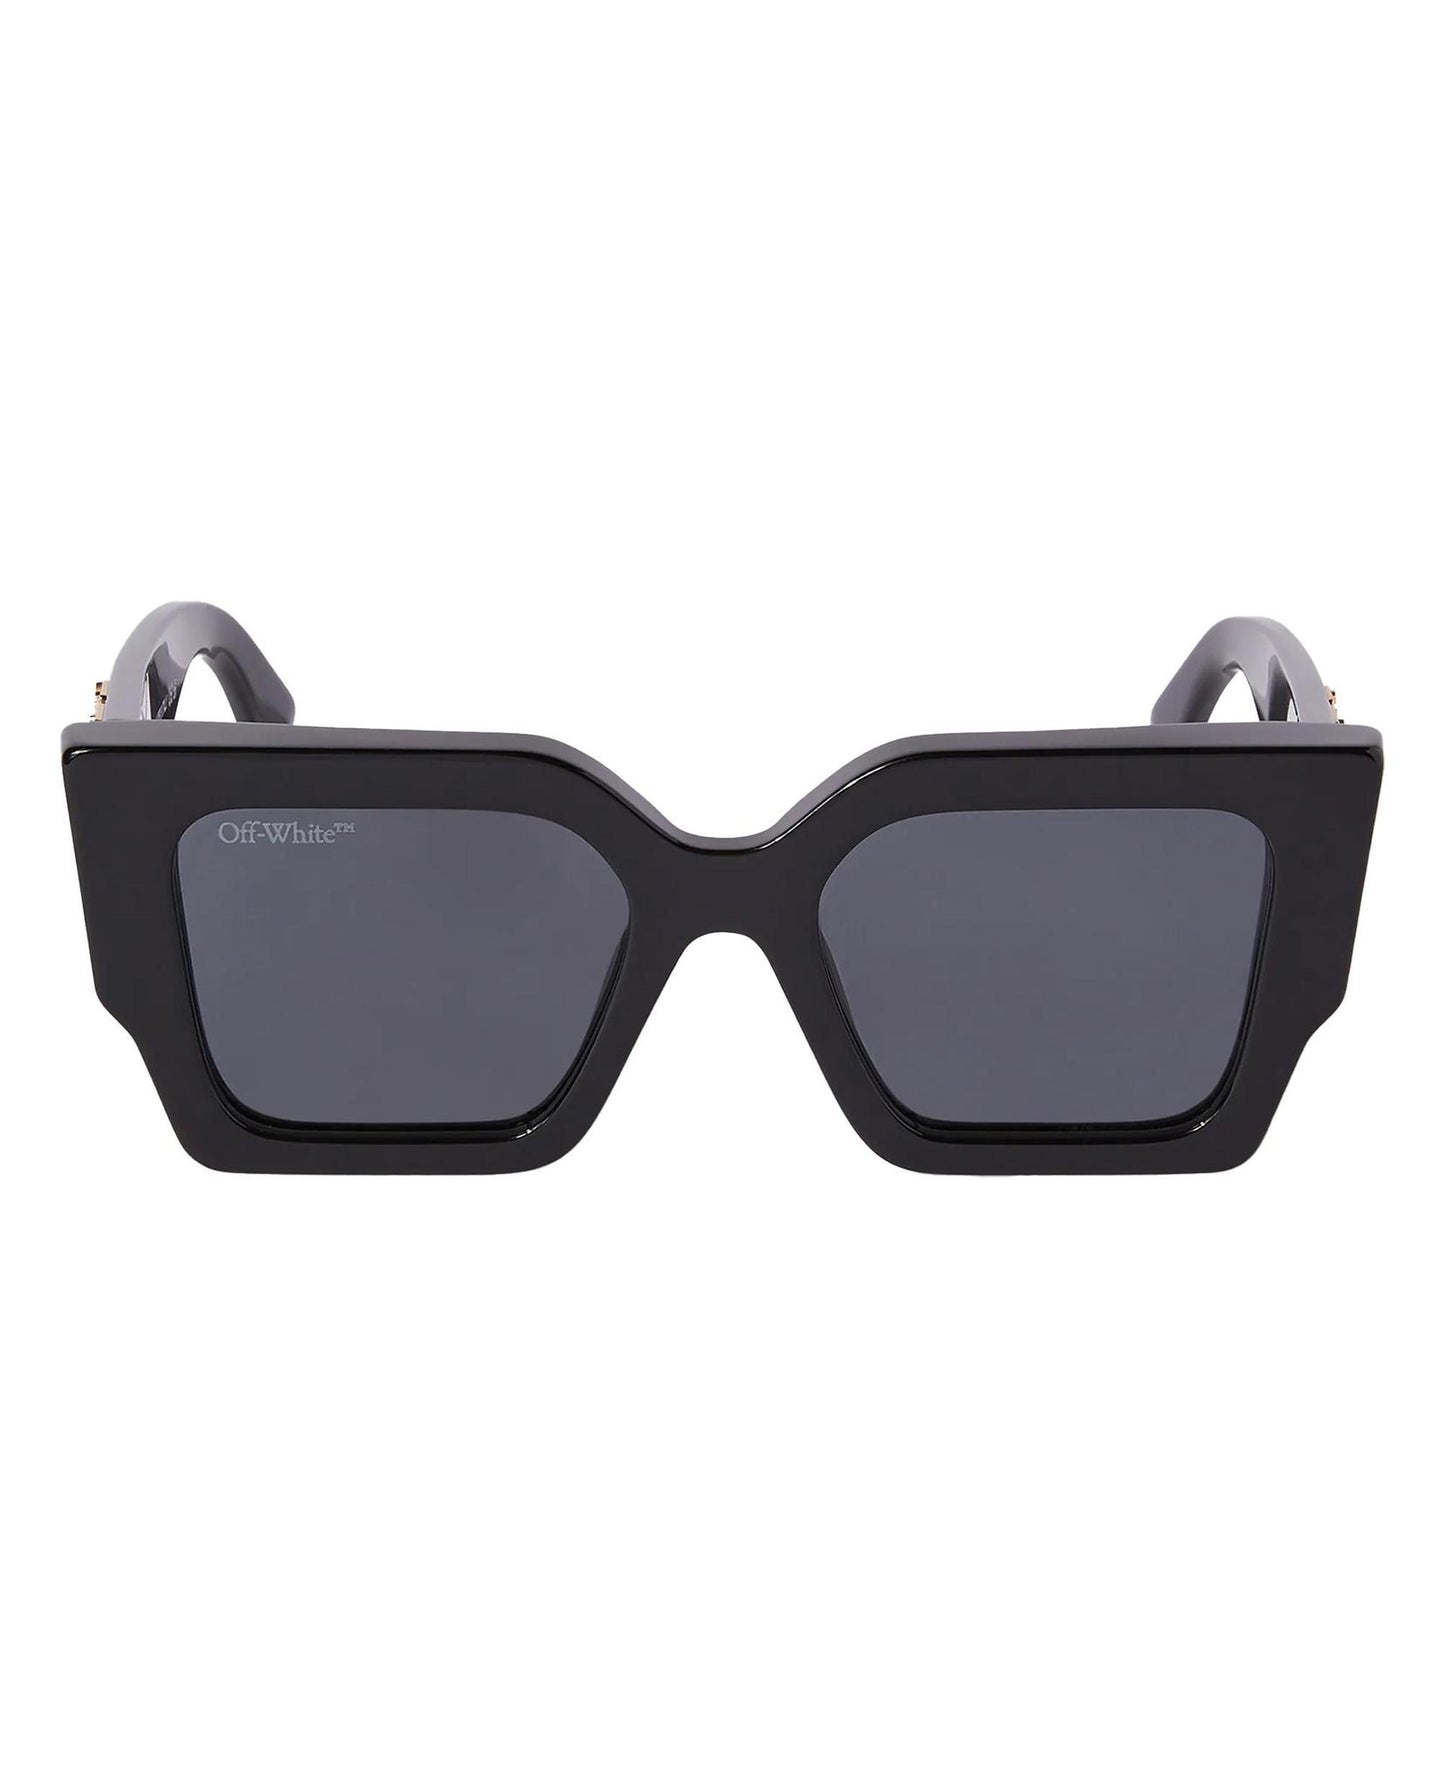 Off-White Catalina Square Sunglasses OERI003C99PLA0011007 Black Frame Grey  Lens